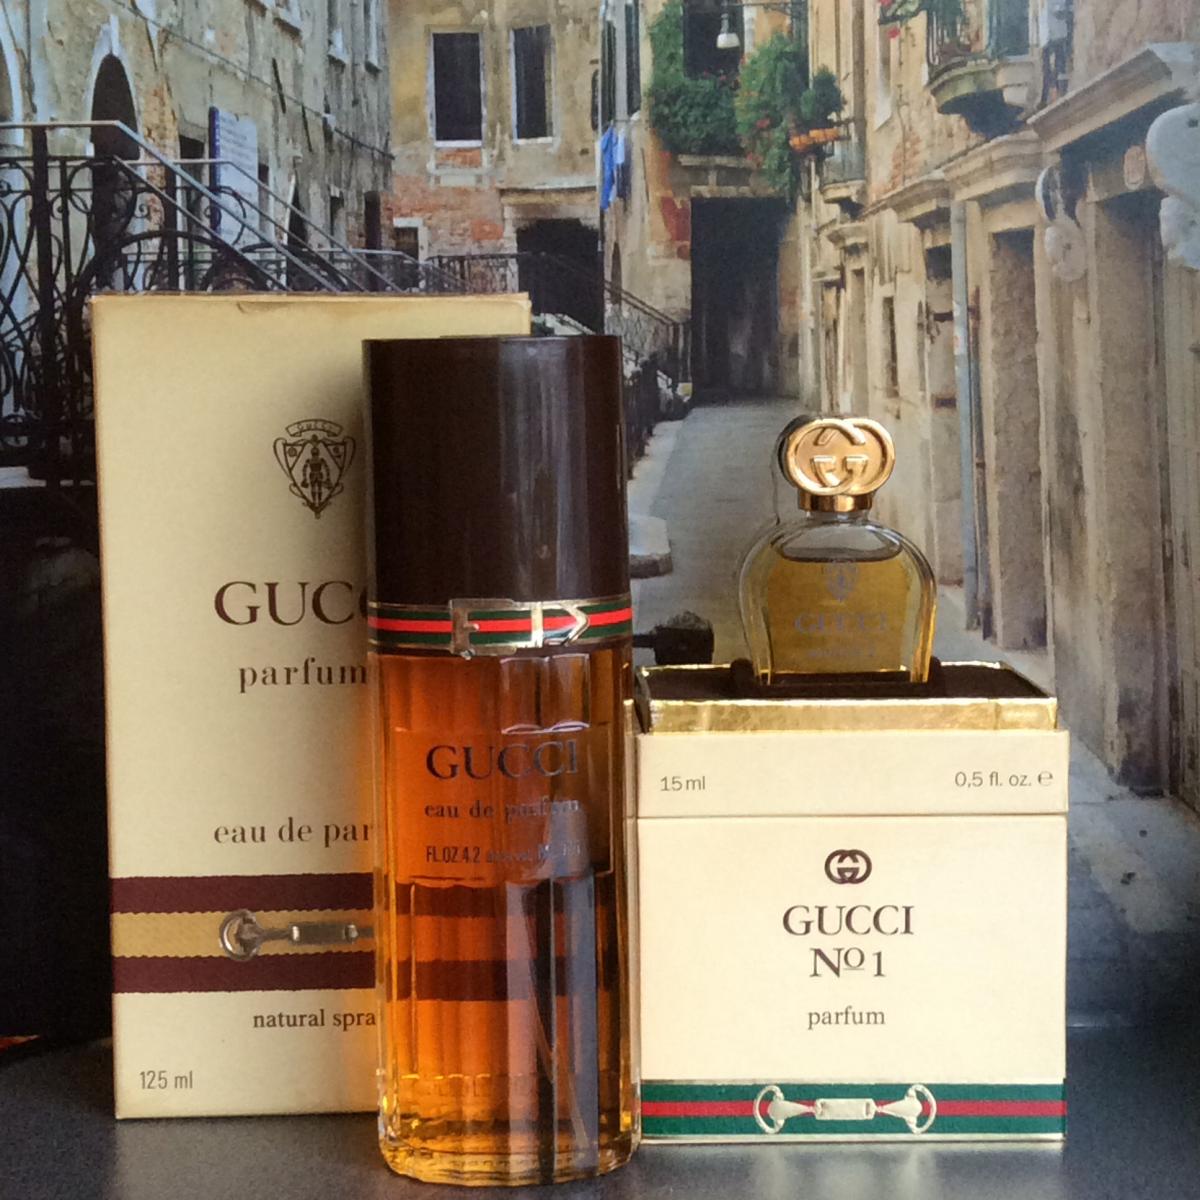 Gucci No 1 Eau de Parfum Gucci perfume - a fragrance for women 1974